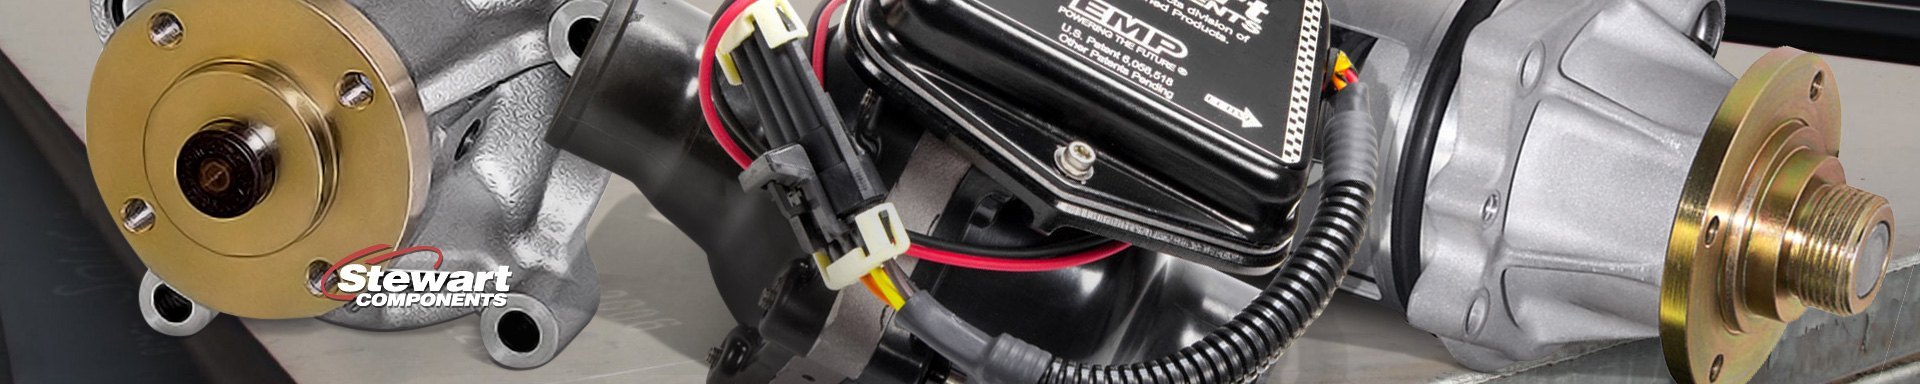 Stewart Components Racing Radiators & Cooling Parts